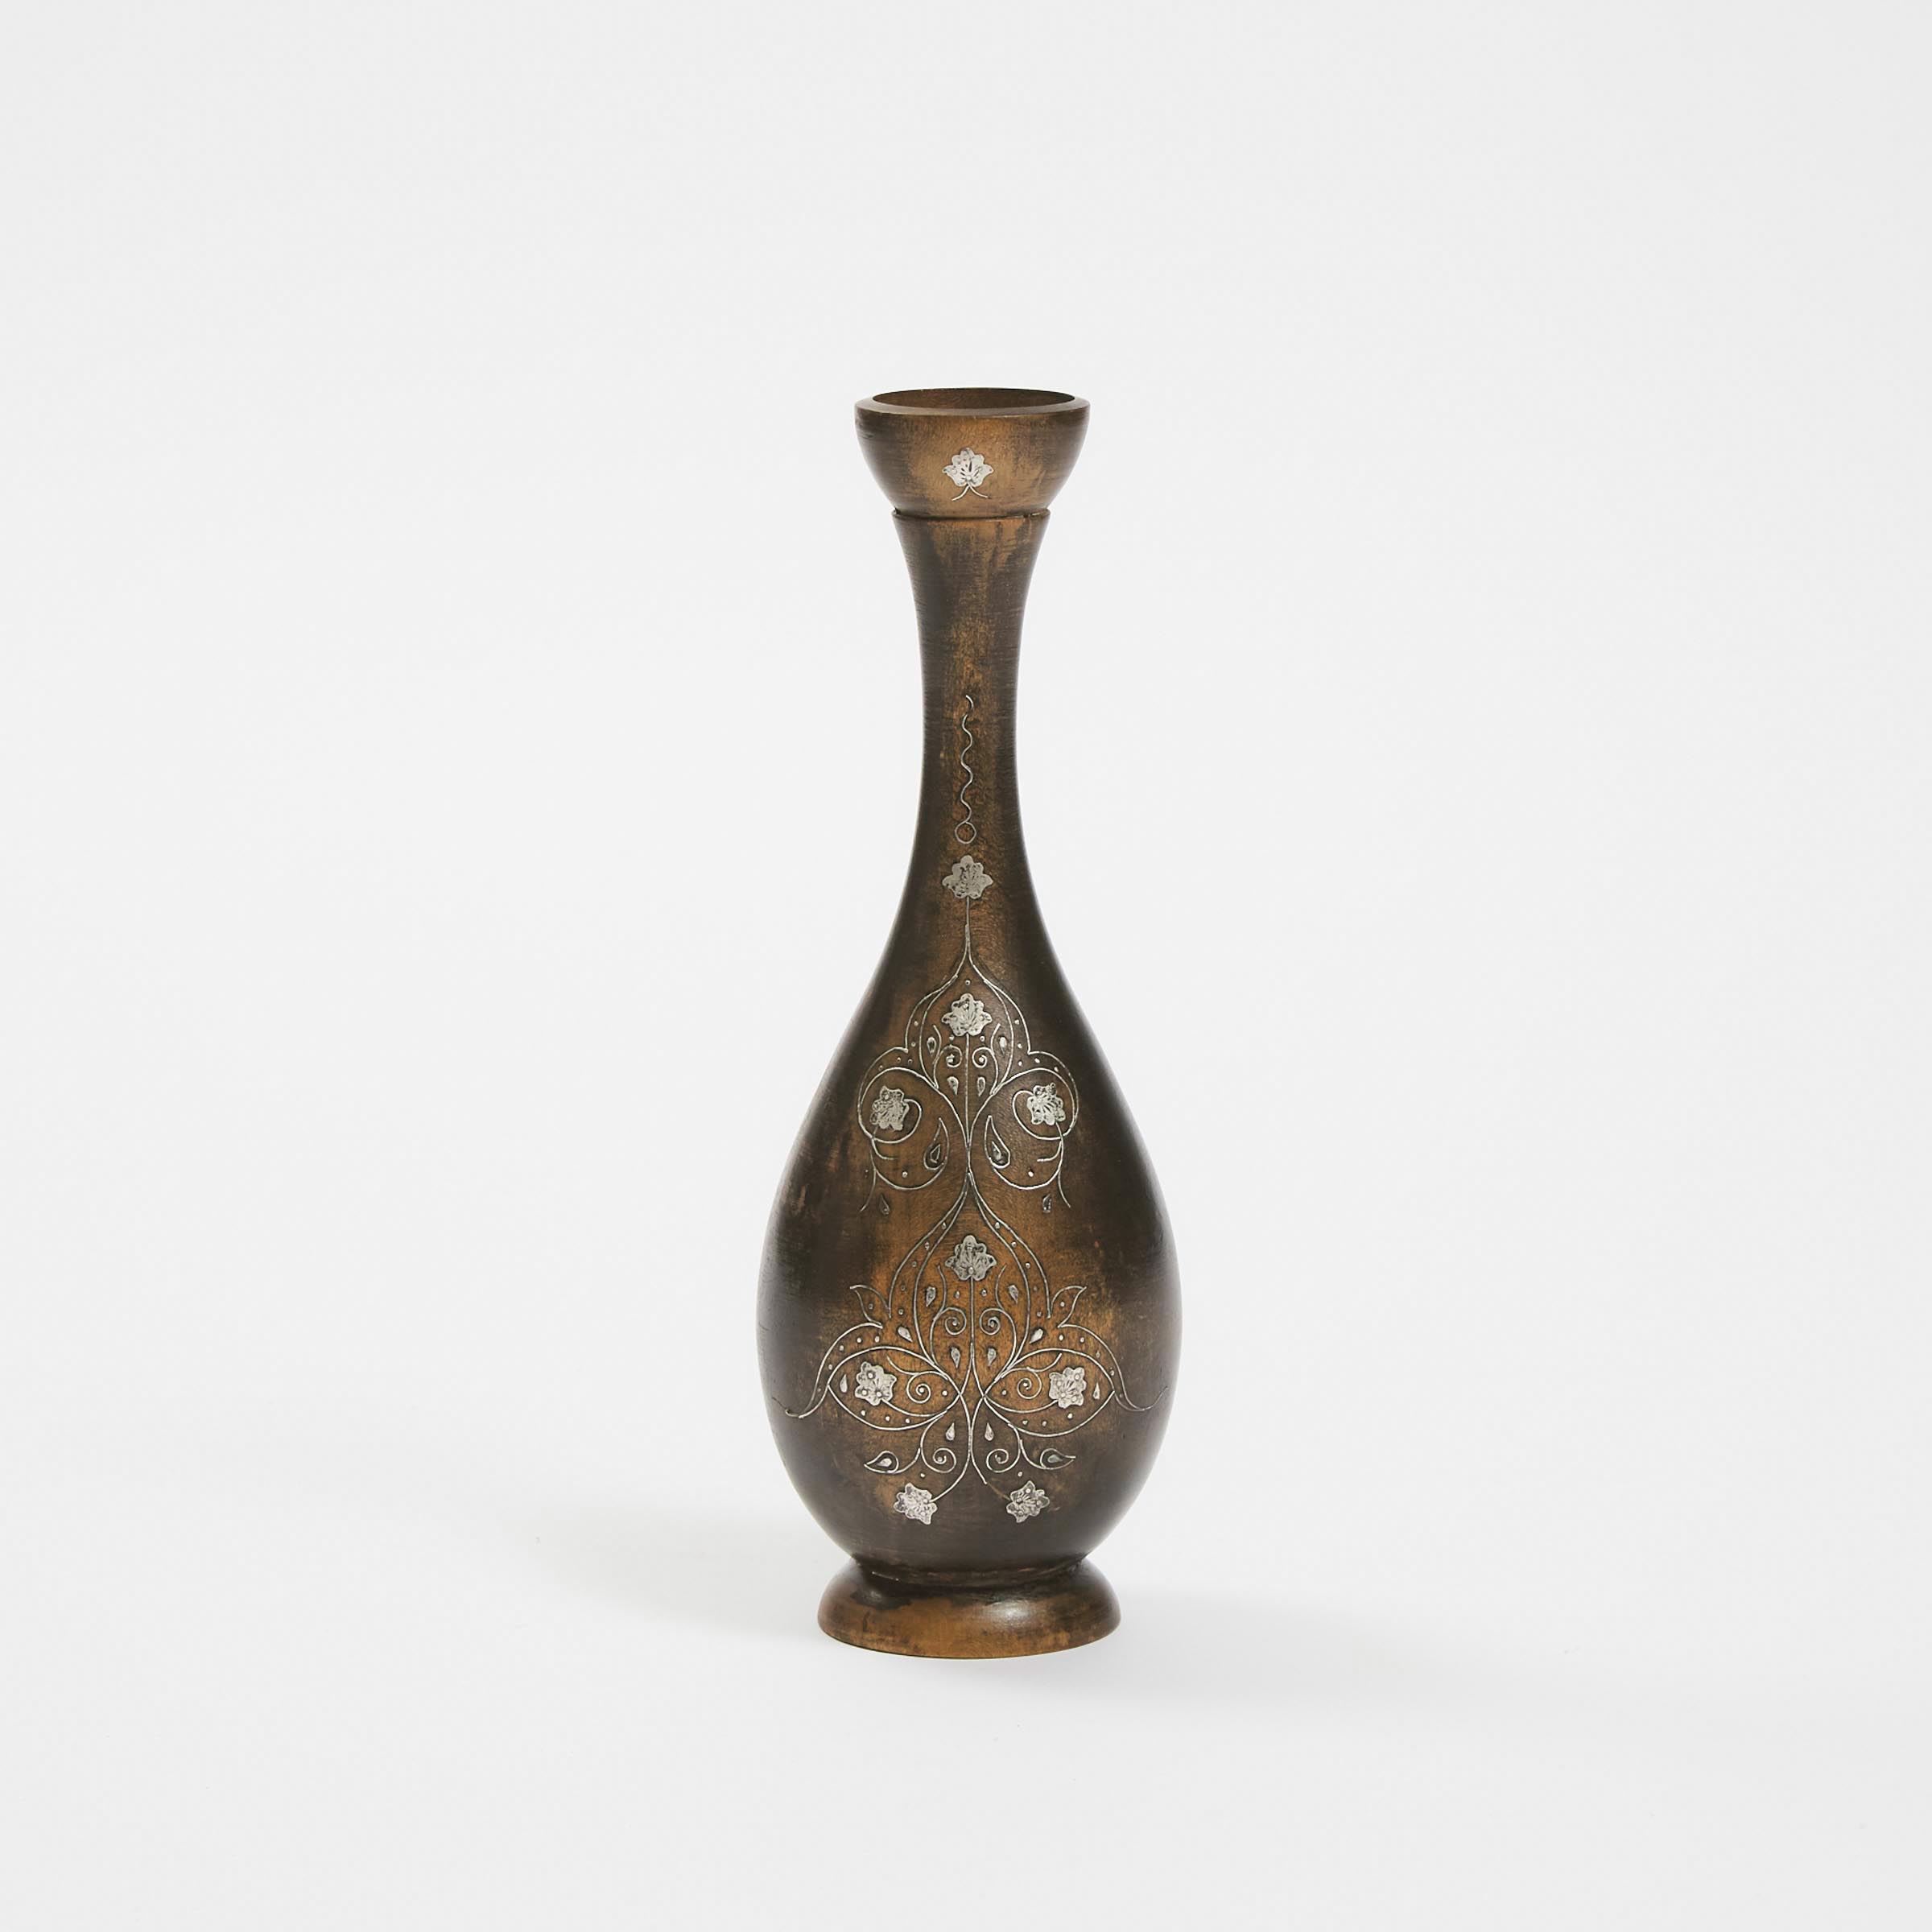 A Prototype Silver-Inlaid Wood Bidri Vase, India, 19th/20th Century